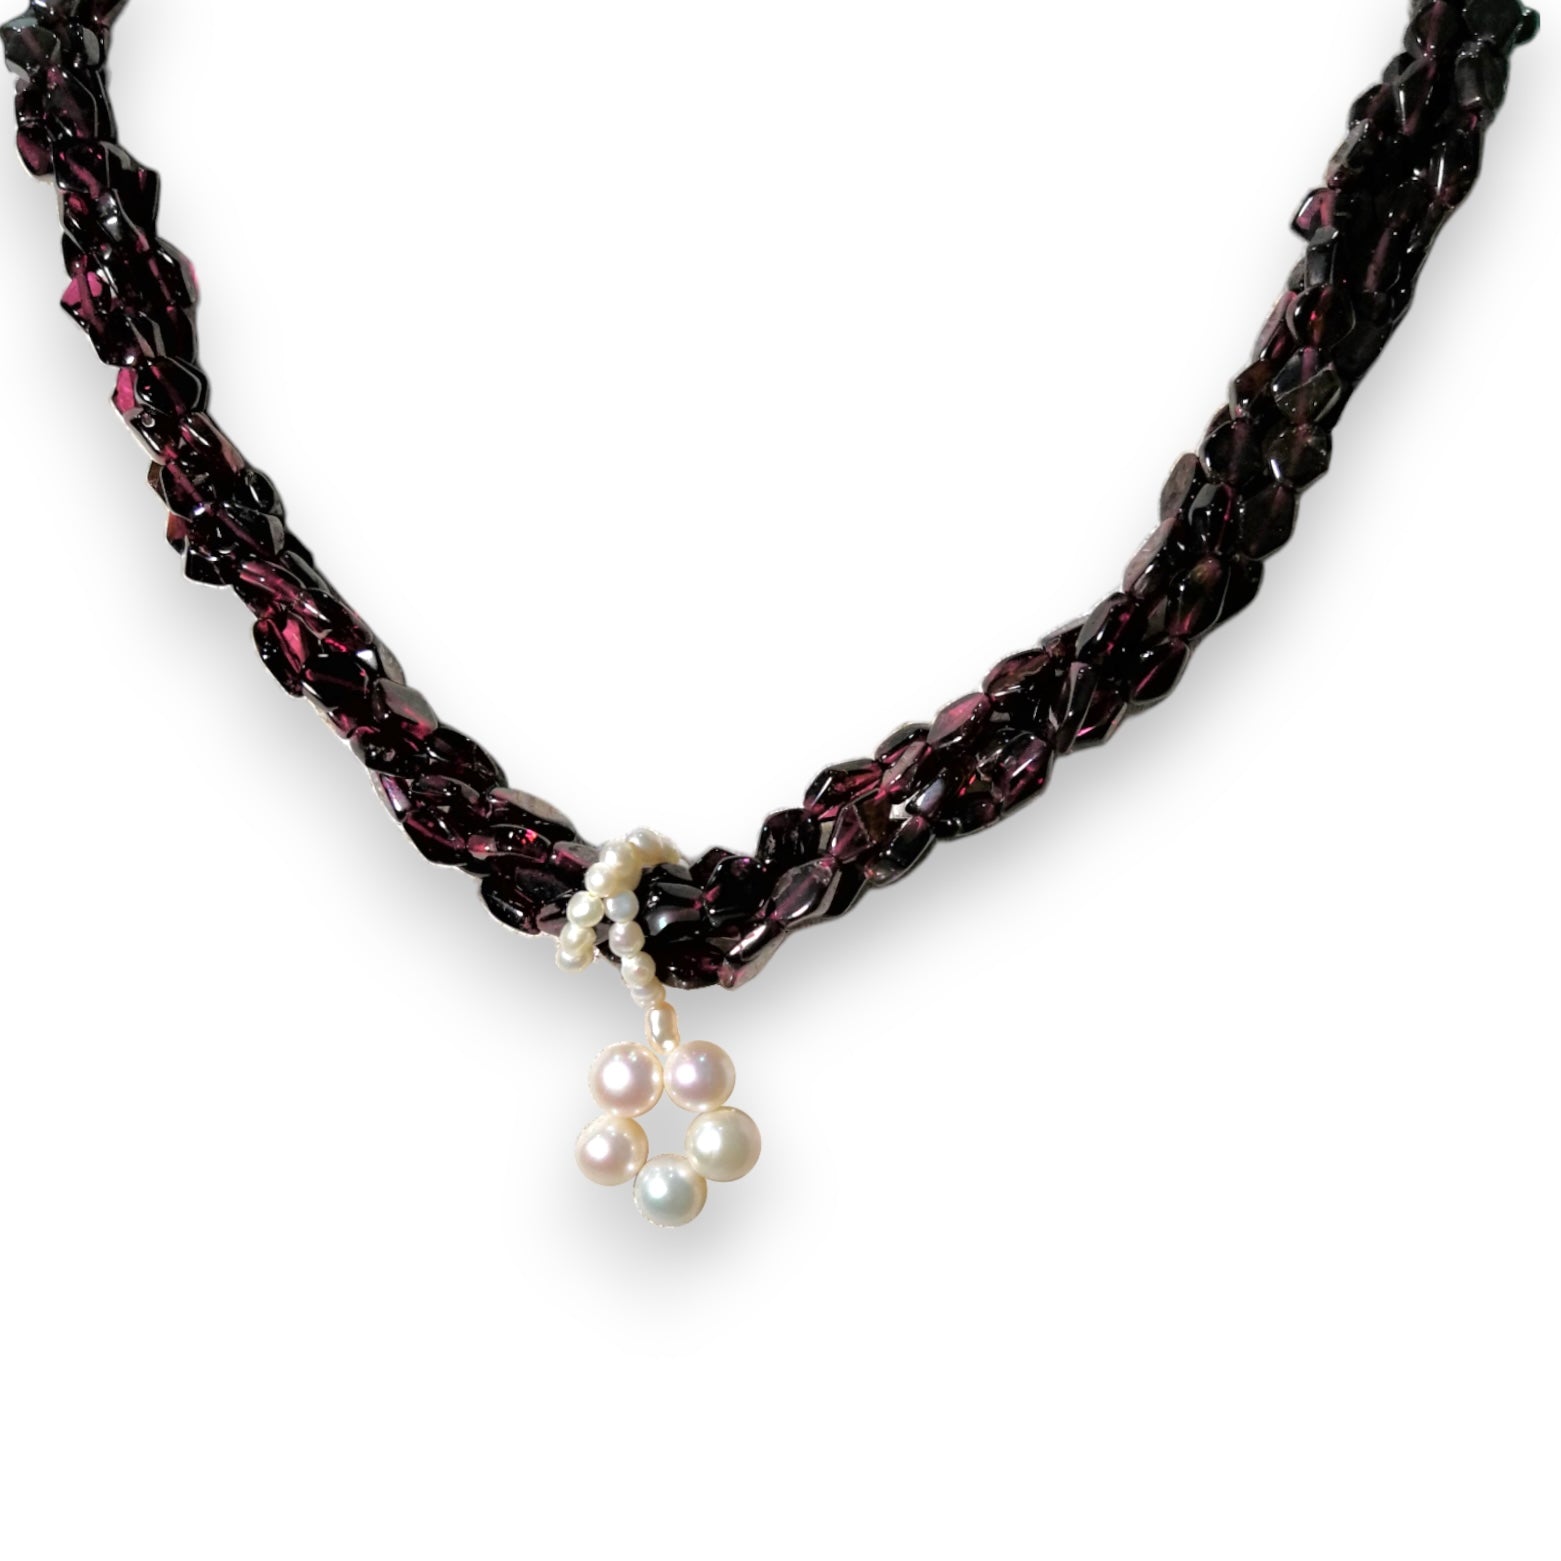 Natural Handmade Twisted Necklace 16"-18" Garnet Pearls Gemstone Beads Jewelry